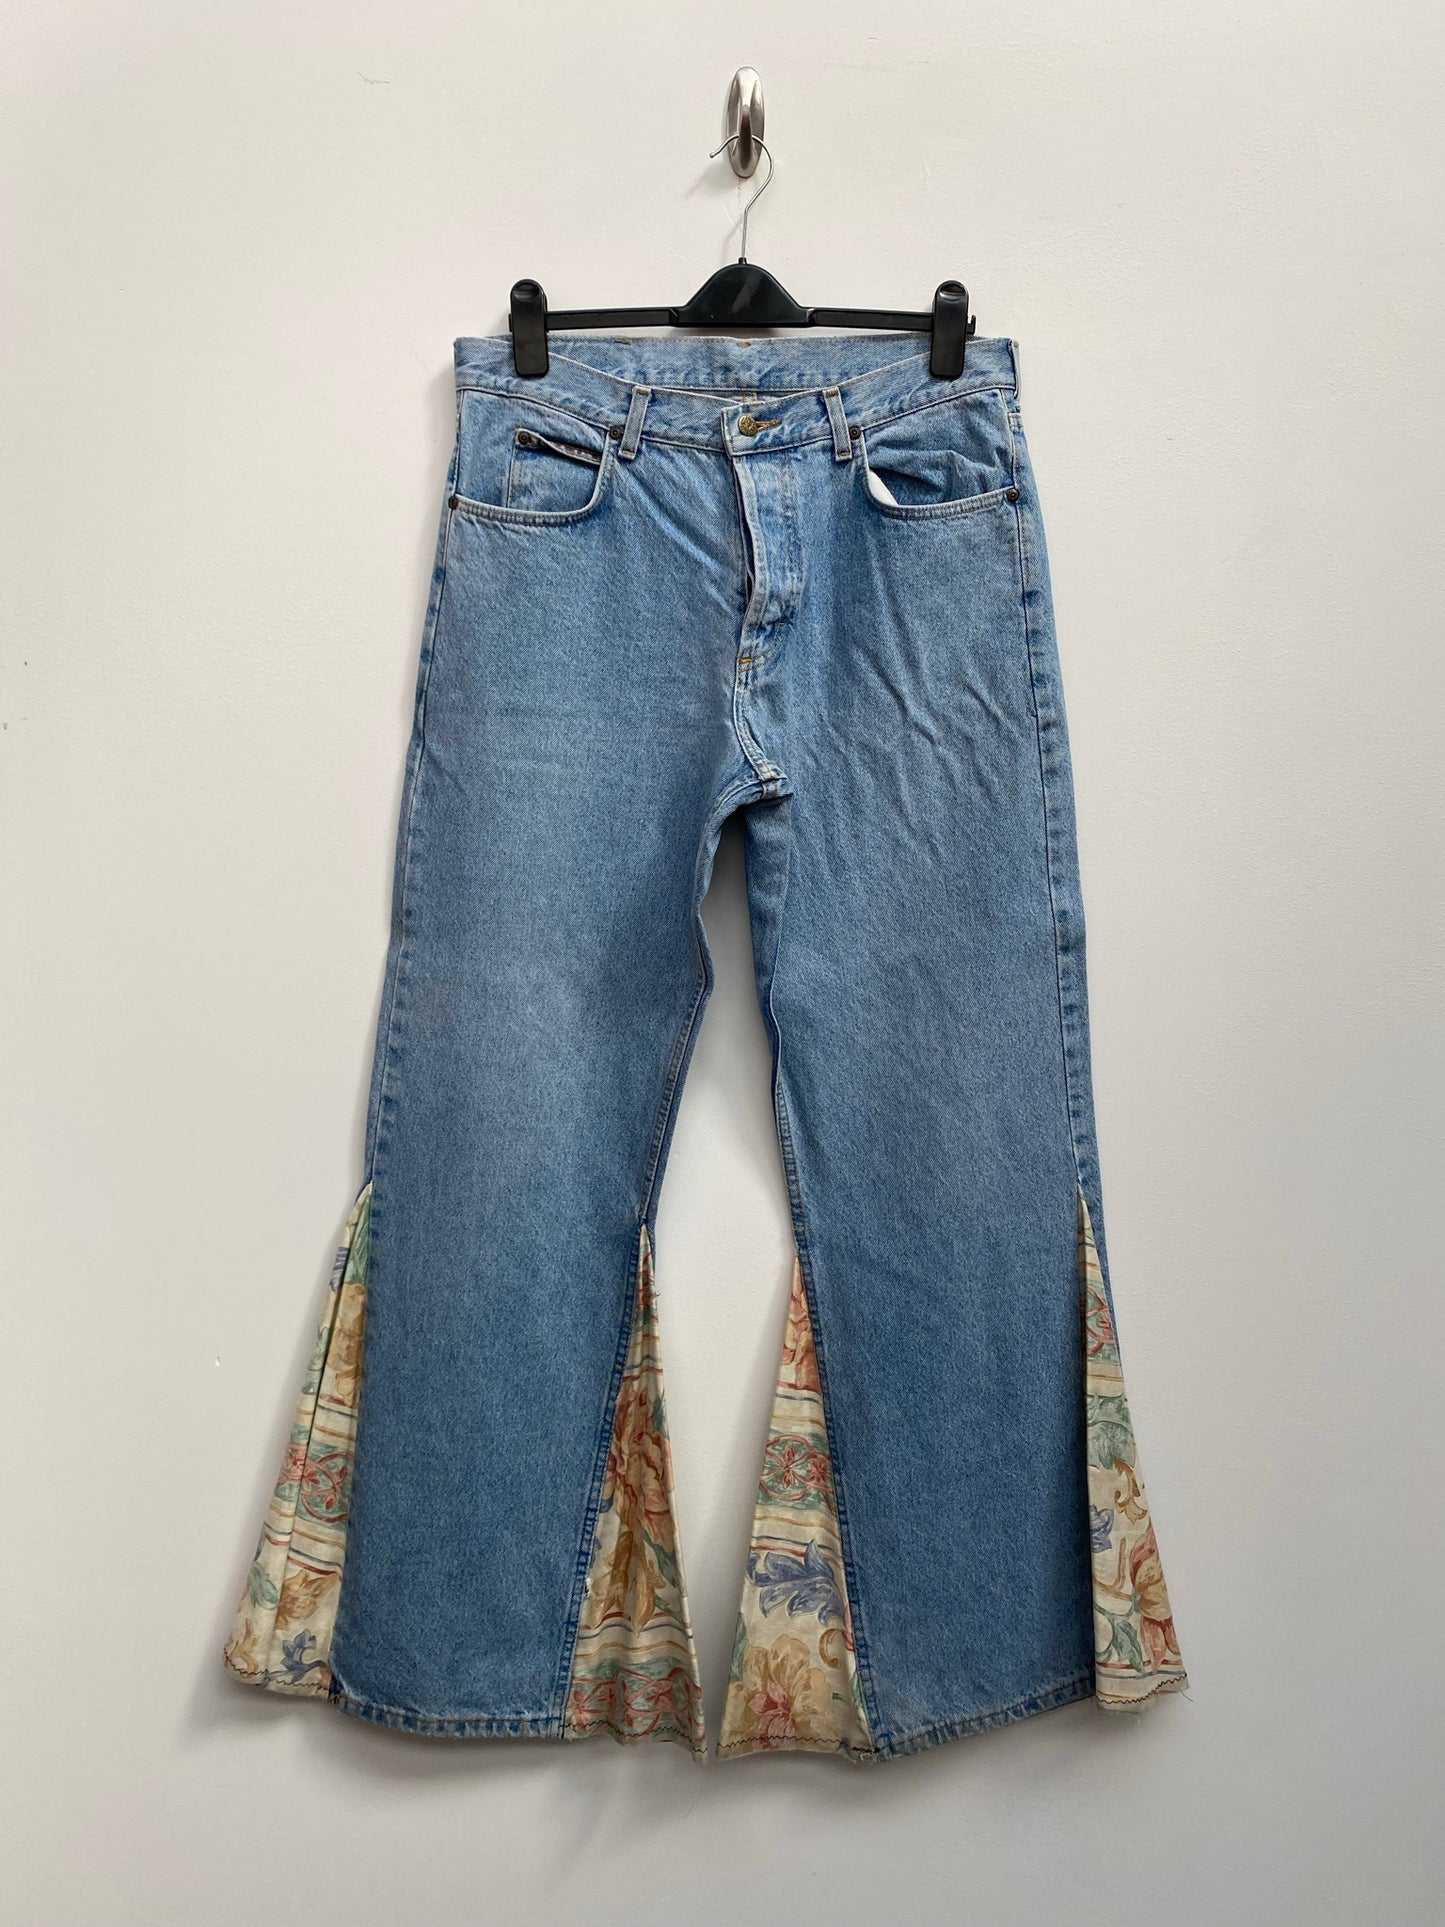 70s Denim Flared Lee Jeans Size 34-34 - Ex Hire Fancy Dress Costume